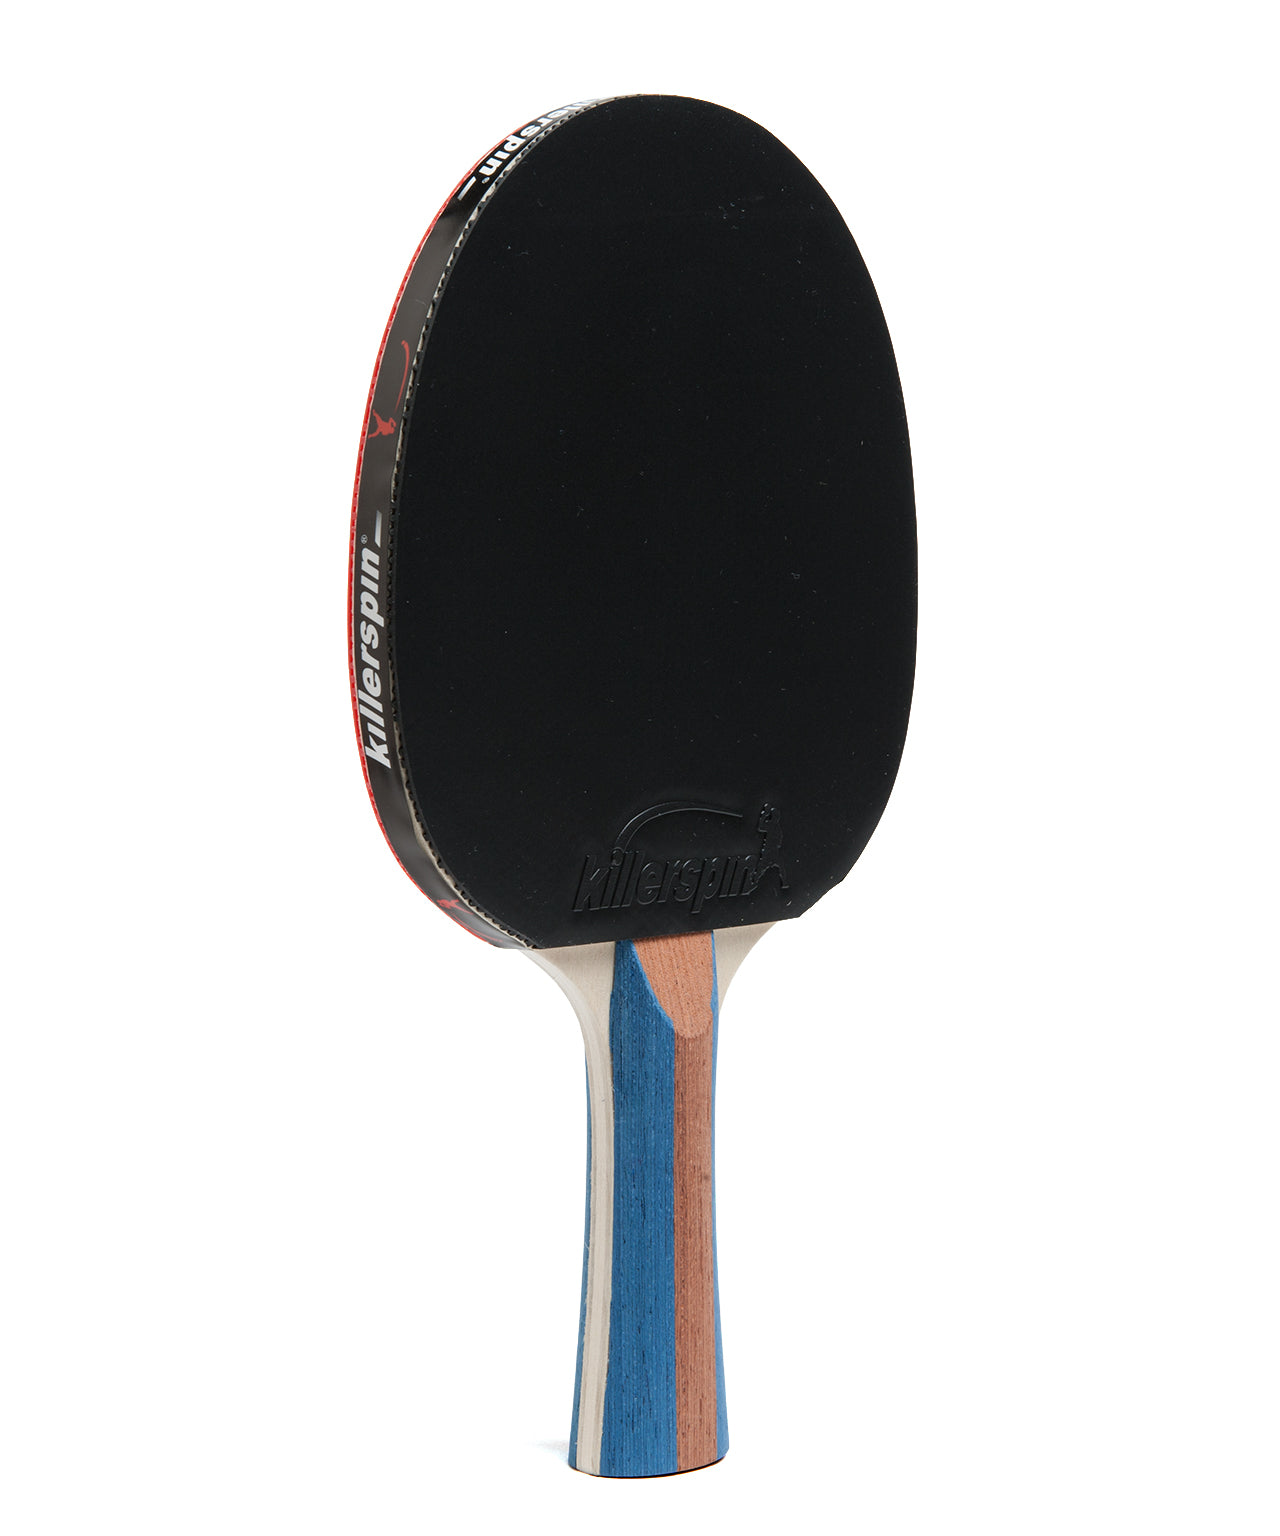 Killerspin Ping Pong Racket Set JetSet2  - Black Rubber